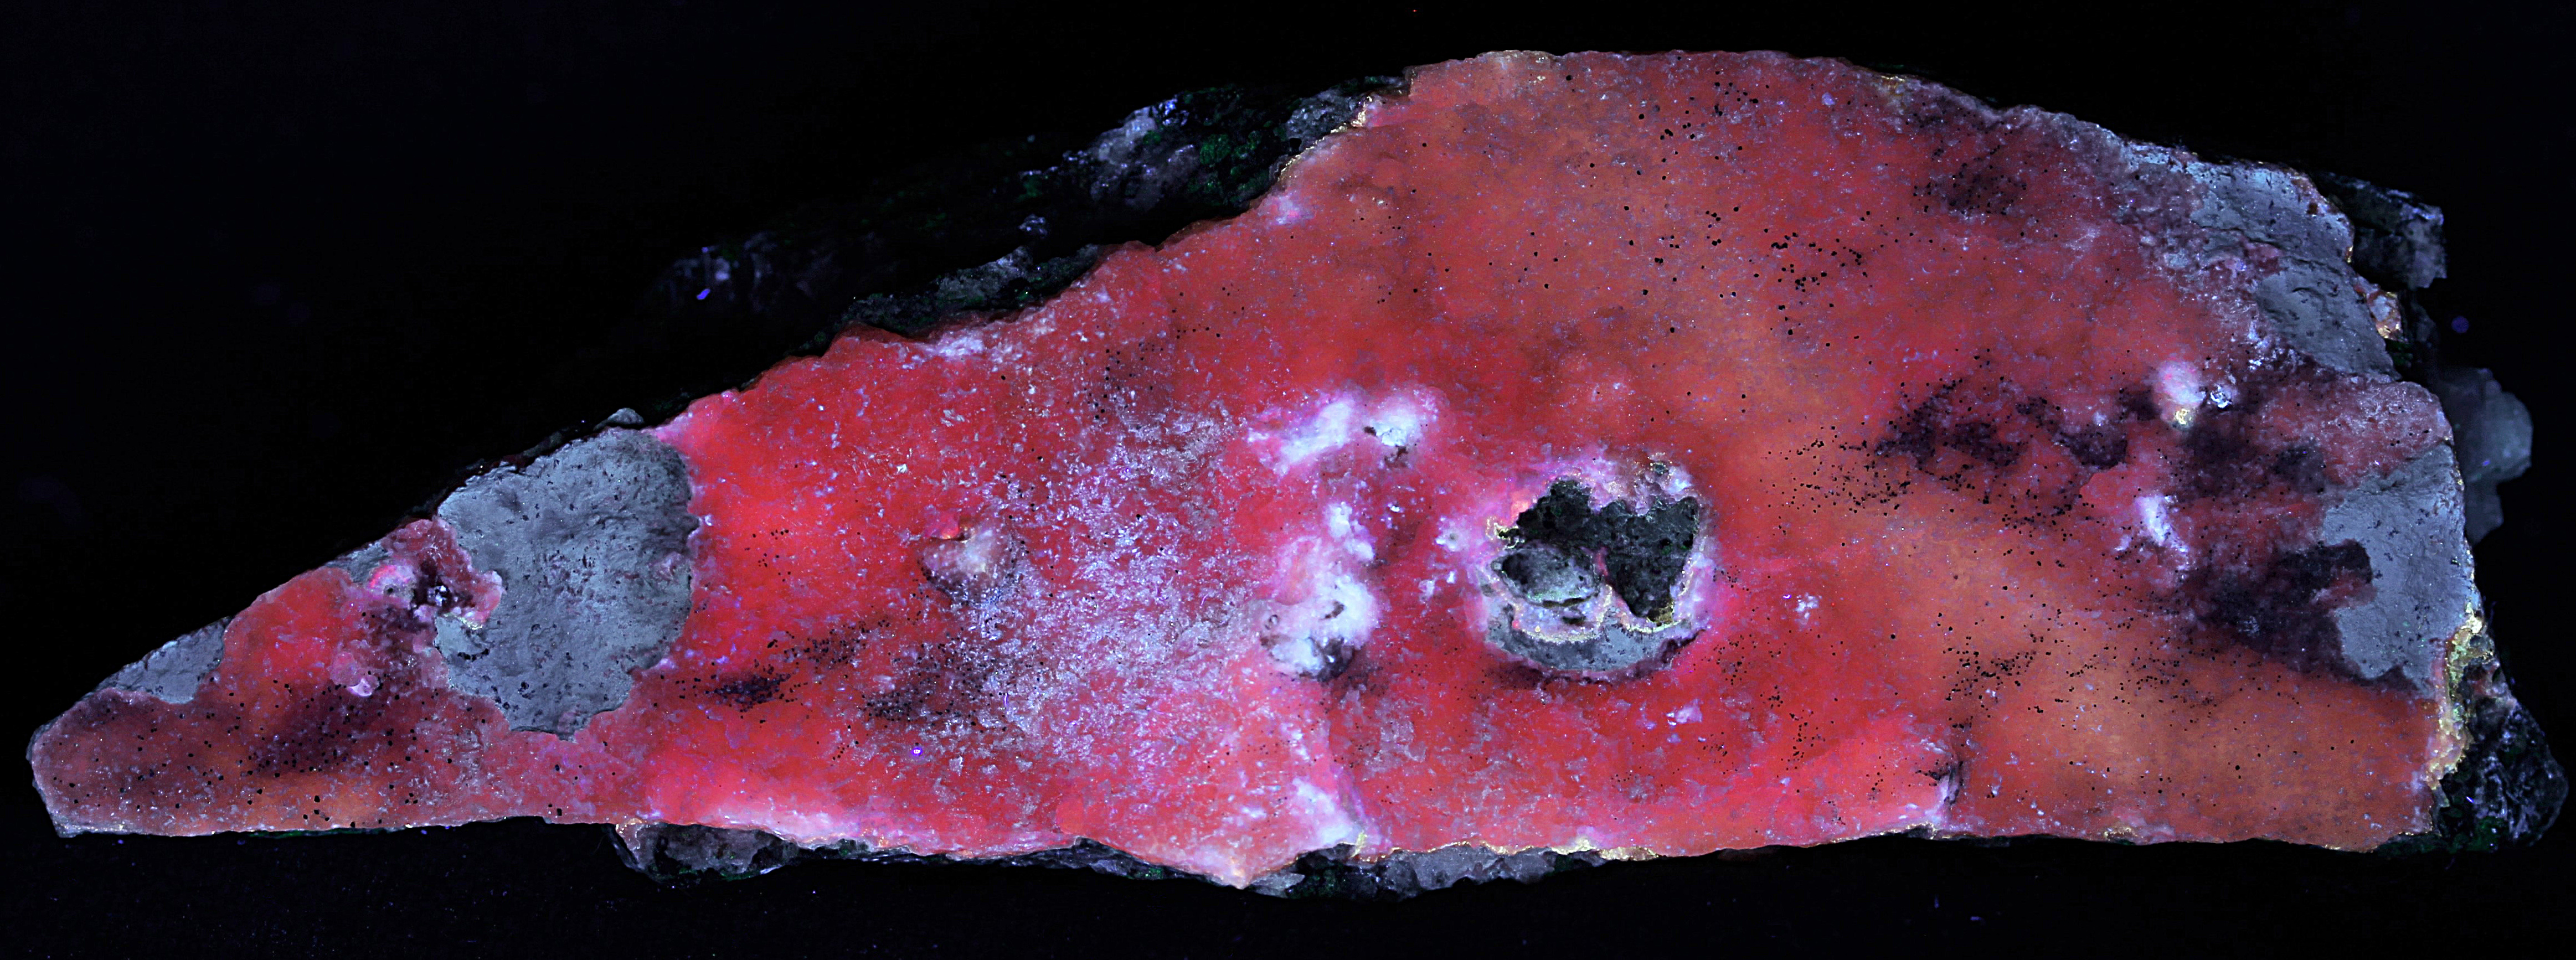 Calcite druze on franklinite and willemite from the Sterling Hill Mine, Ogdensburg, NJ under midwave UV Light